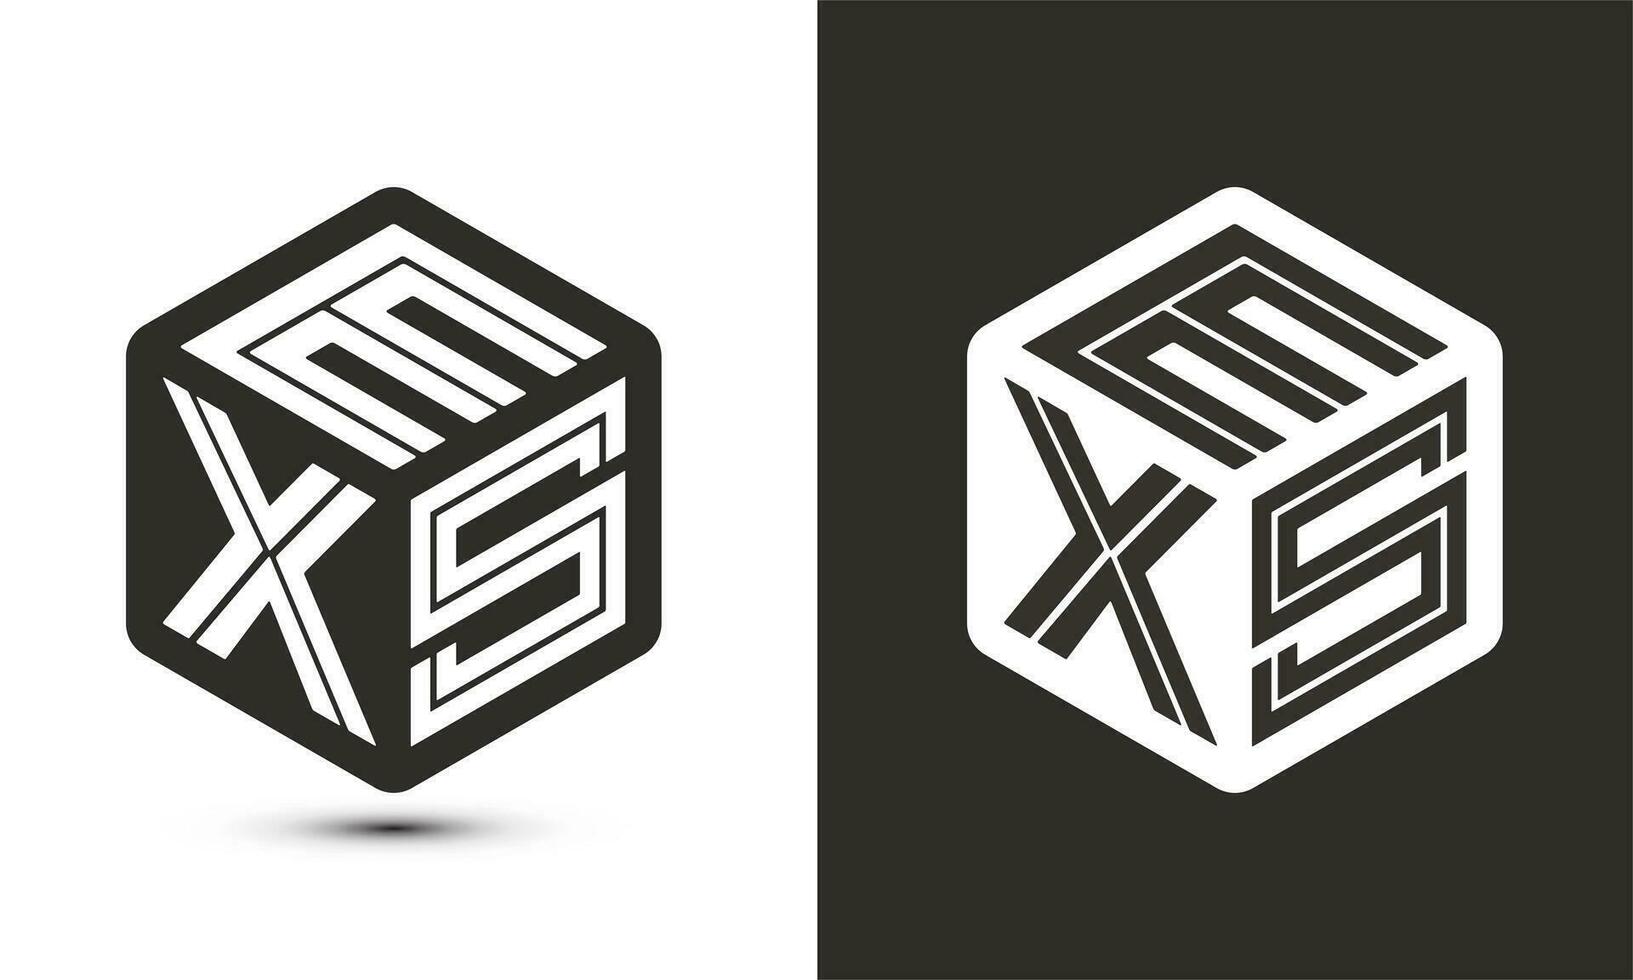 exs letra logo diseño con ilustrador cubo logo, vector logo moderno alfabeto fuente superposición estilo.